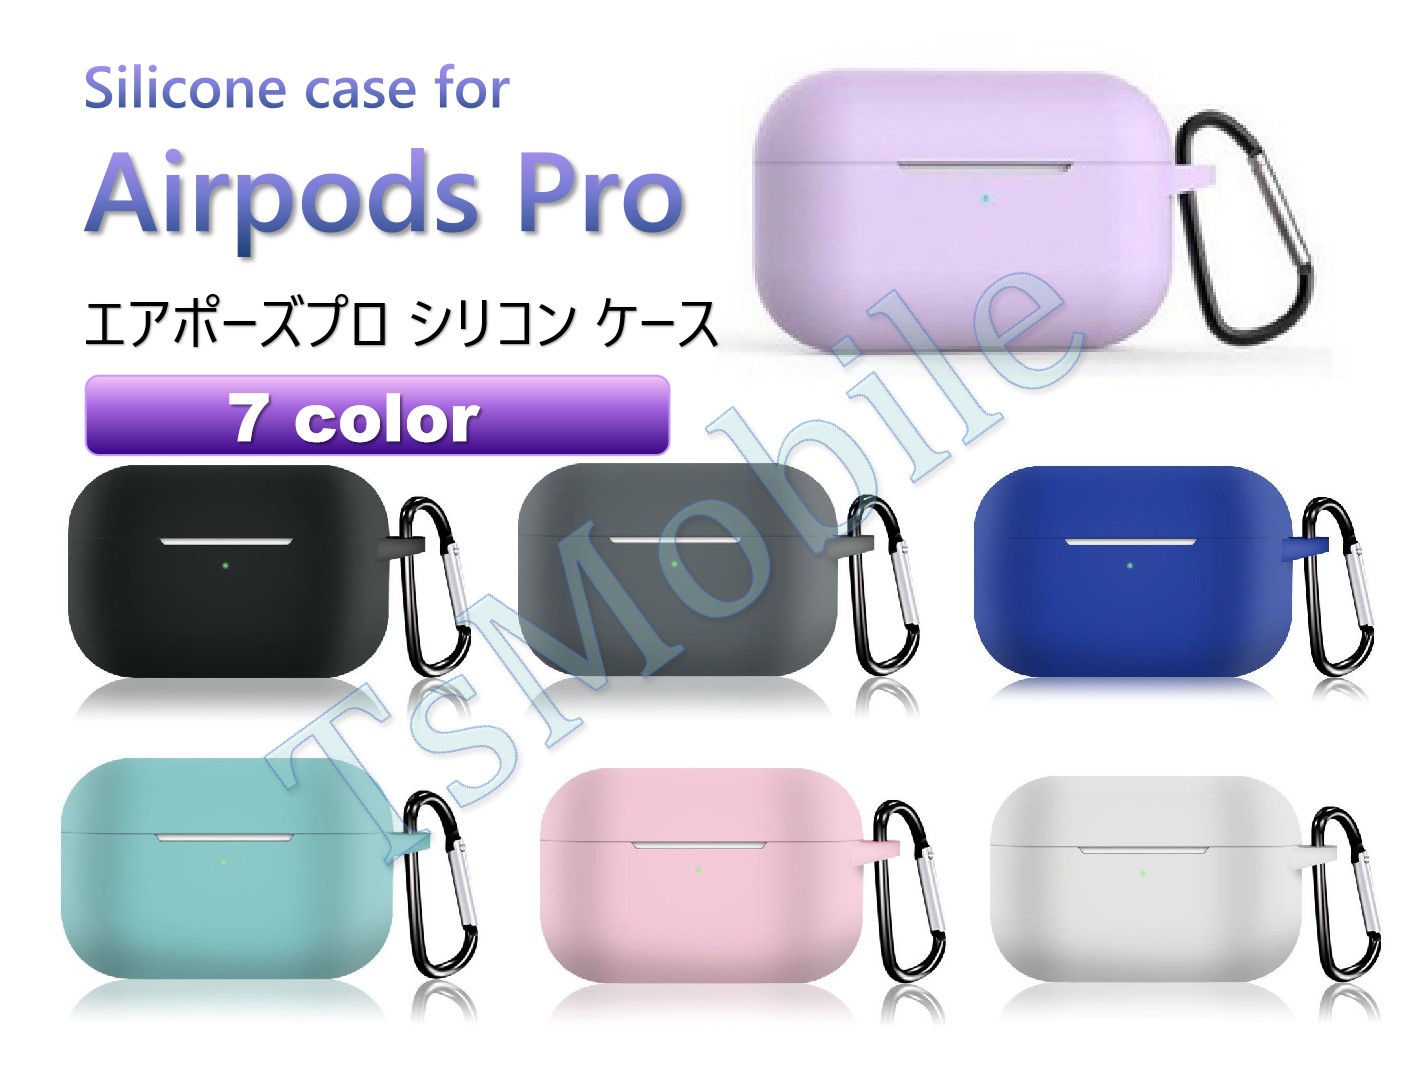 AirPodsPro ケース シリコン AirPods Pro Case カバー カラビナ付き エアーポッズプロケース 防塵 耐衝撃 air pods proケース ソフトケース フック付き